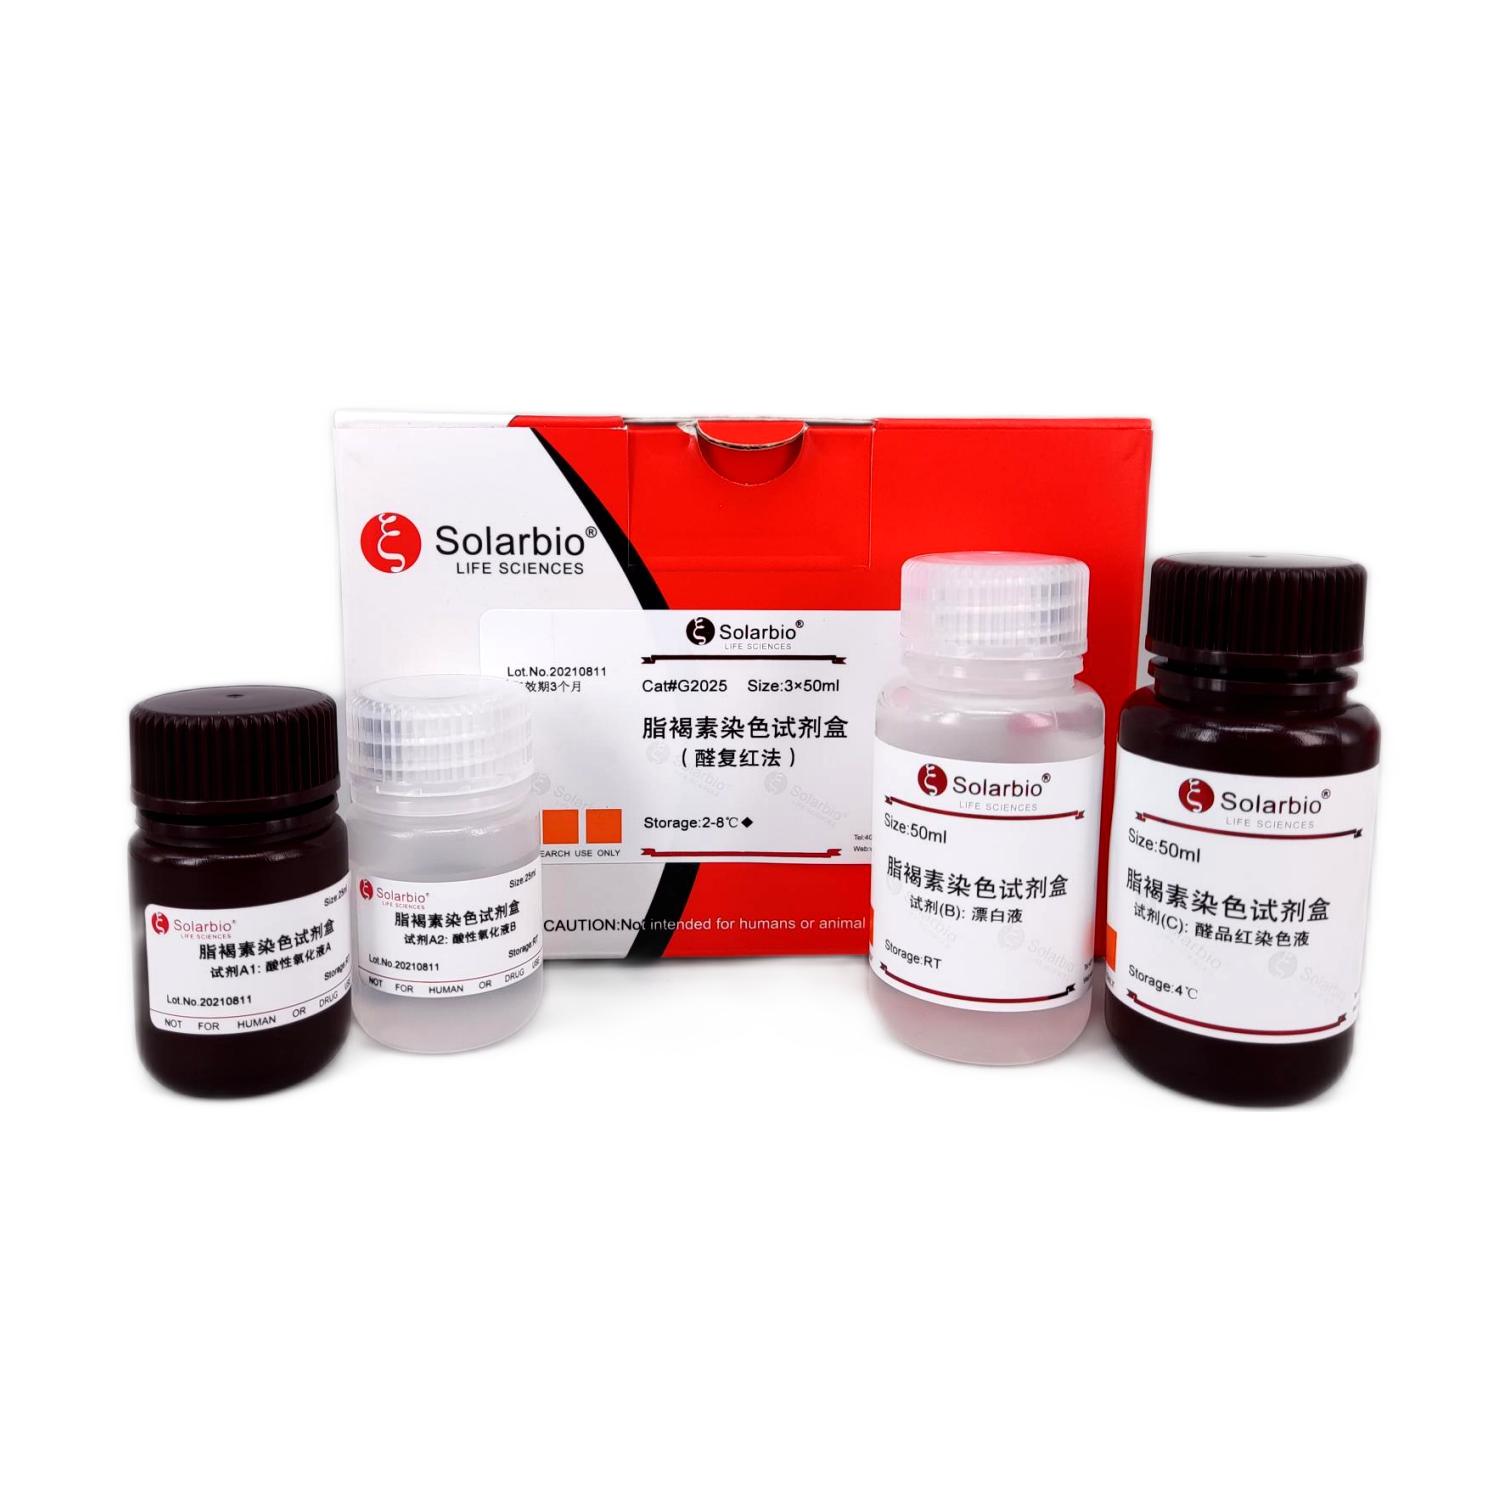 脂褐素染色试剂盒(醛复红法),Lipofuscin Stain Kit(Aldehyde Fuchsin Method)